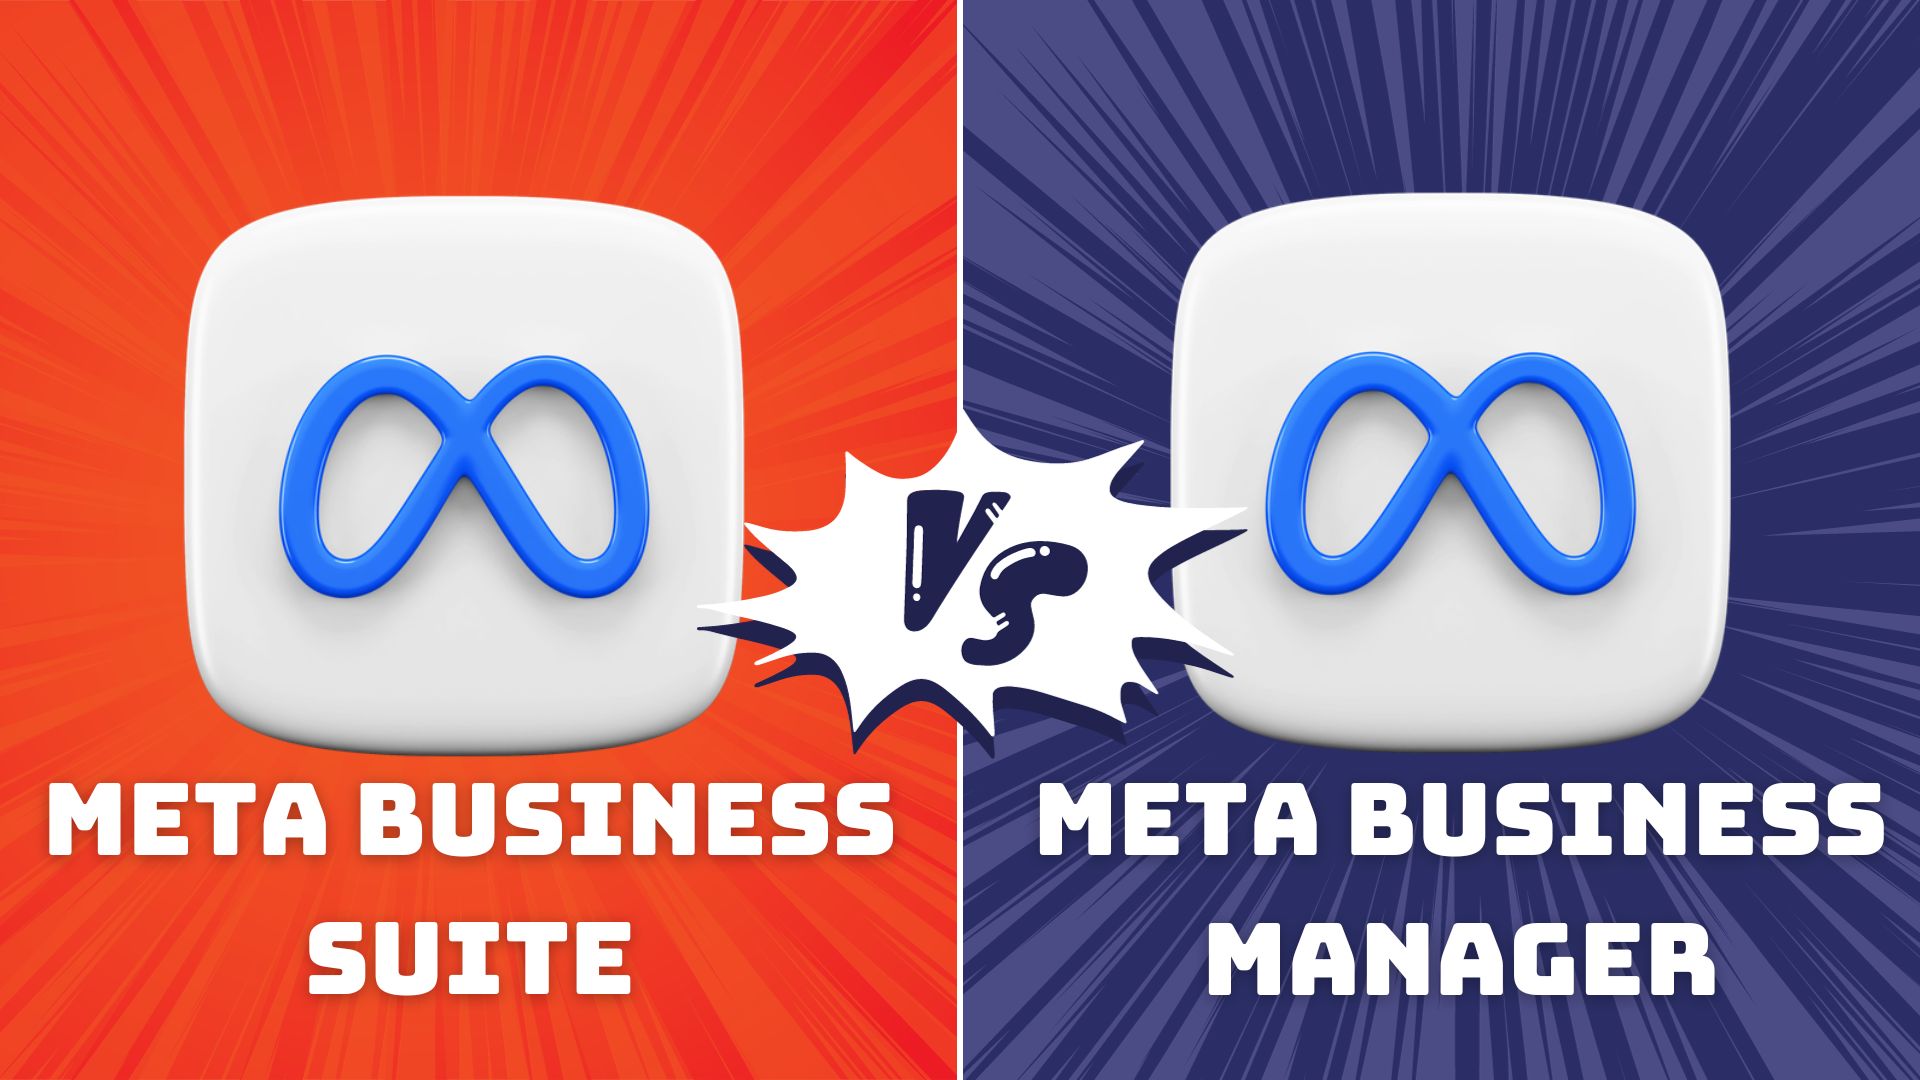 Meta Business Suite versus Meta Business Manager